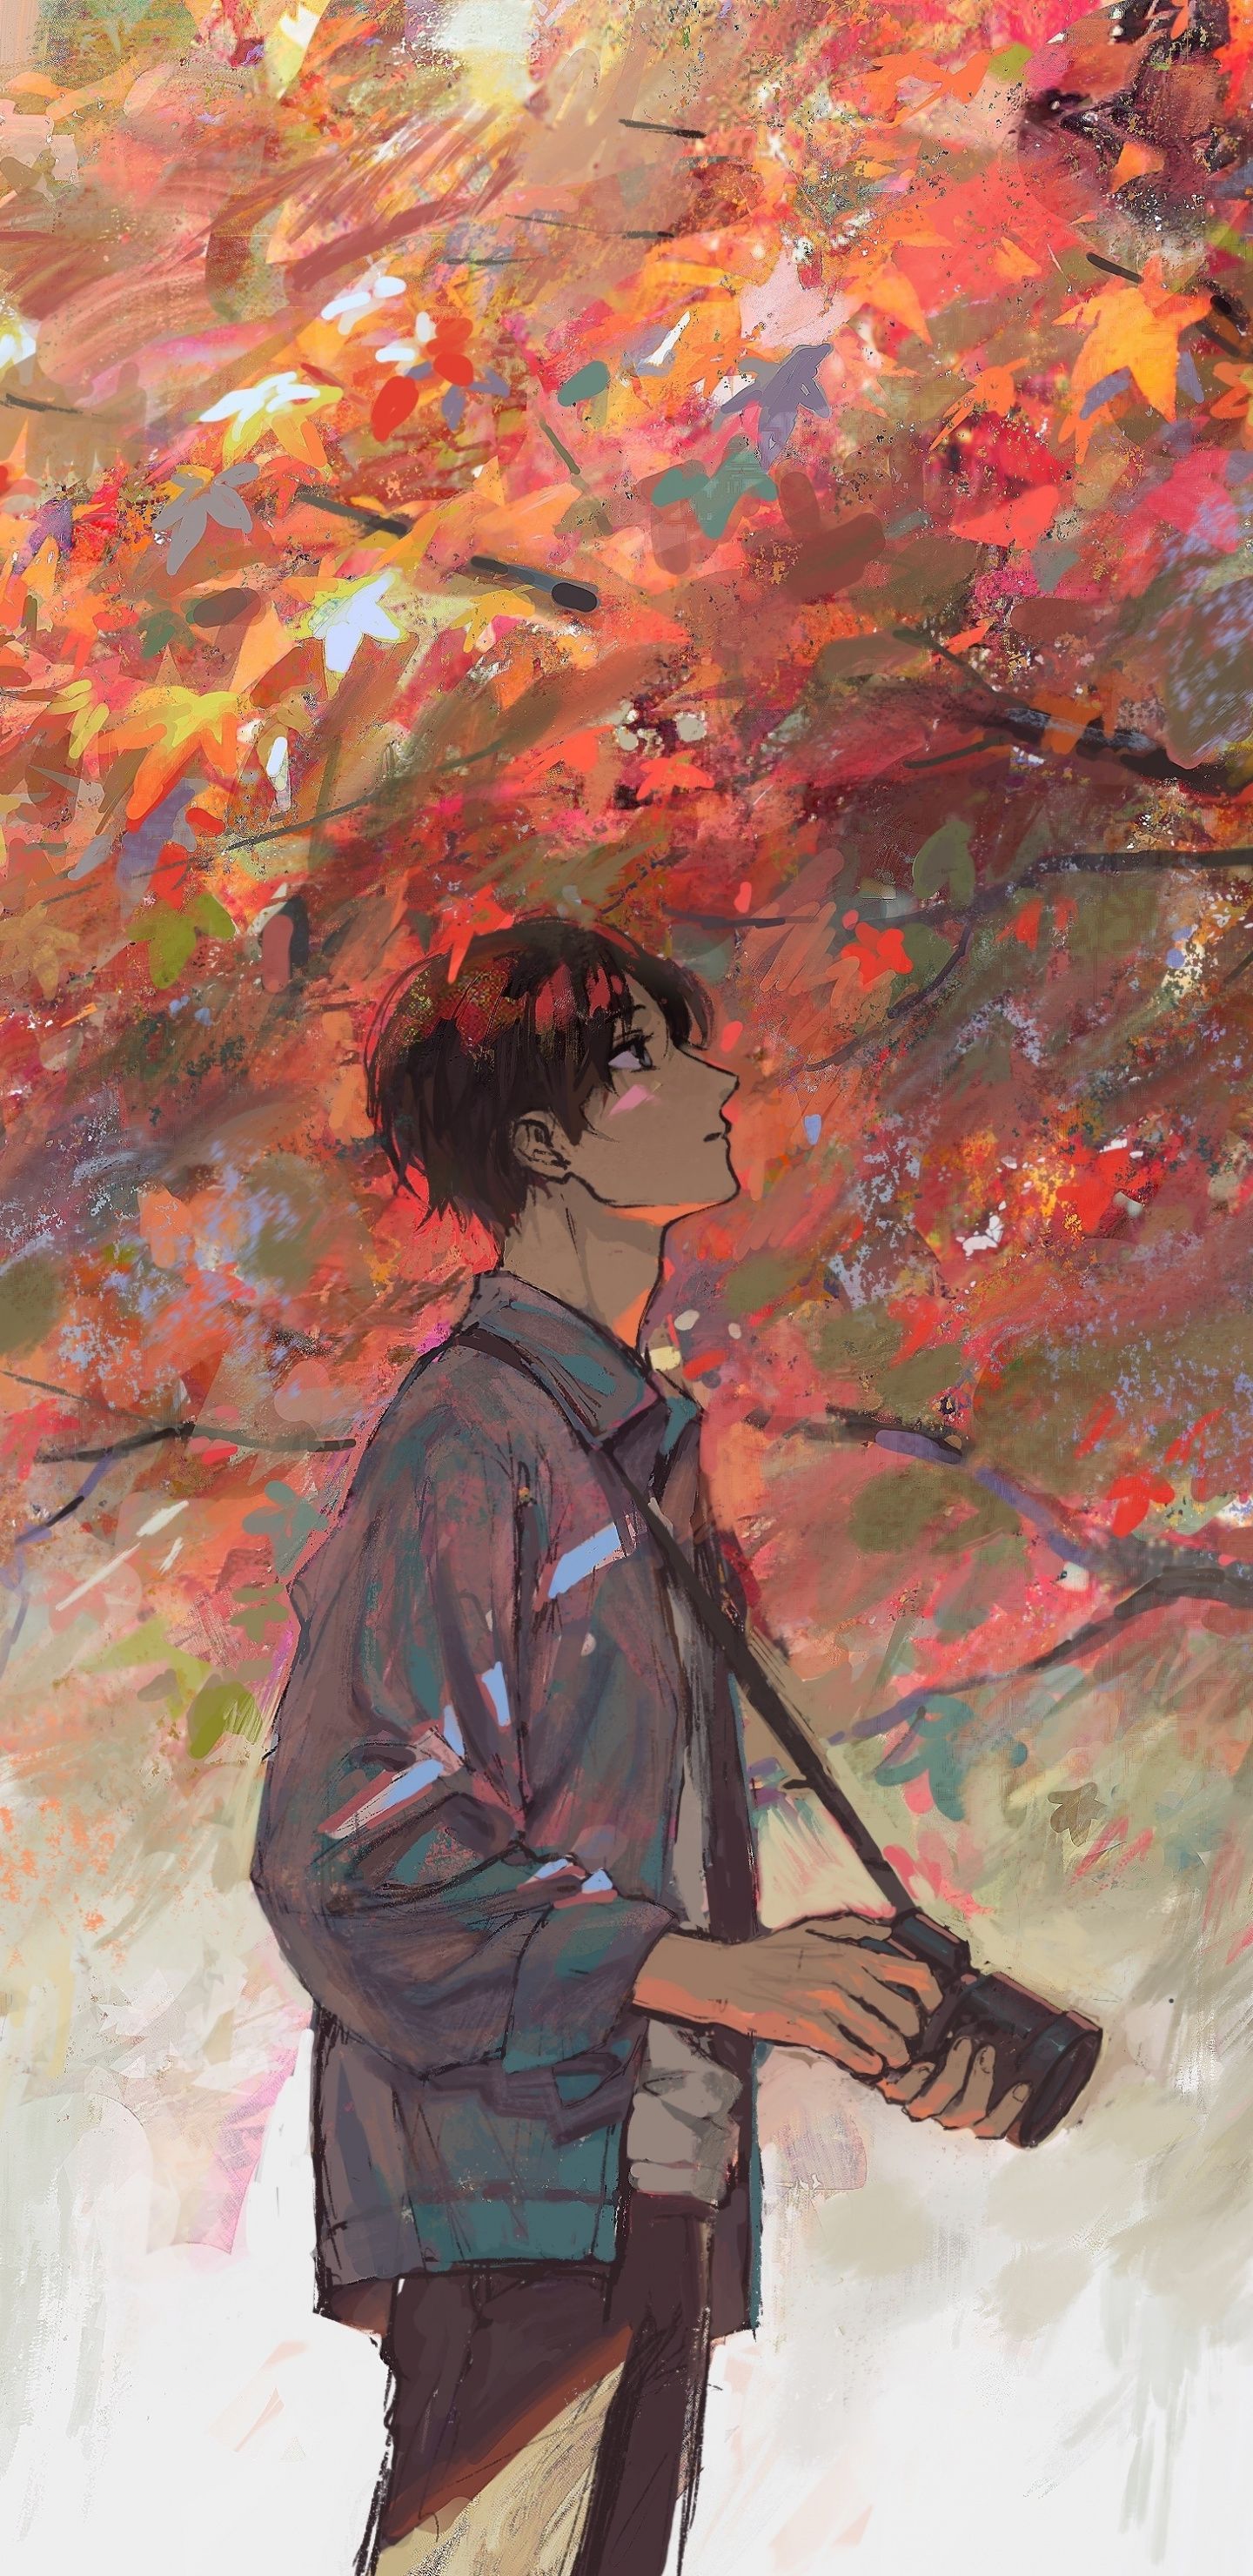 Anime boy, autumn, tree, artwork, 1440x2960 wallpaper. Anime background wallpaper, Anime artwork wallpaper, Anime scenery